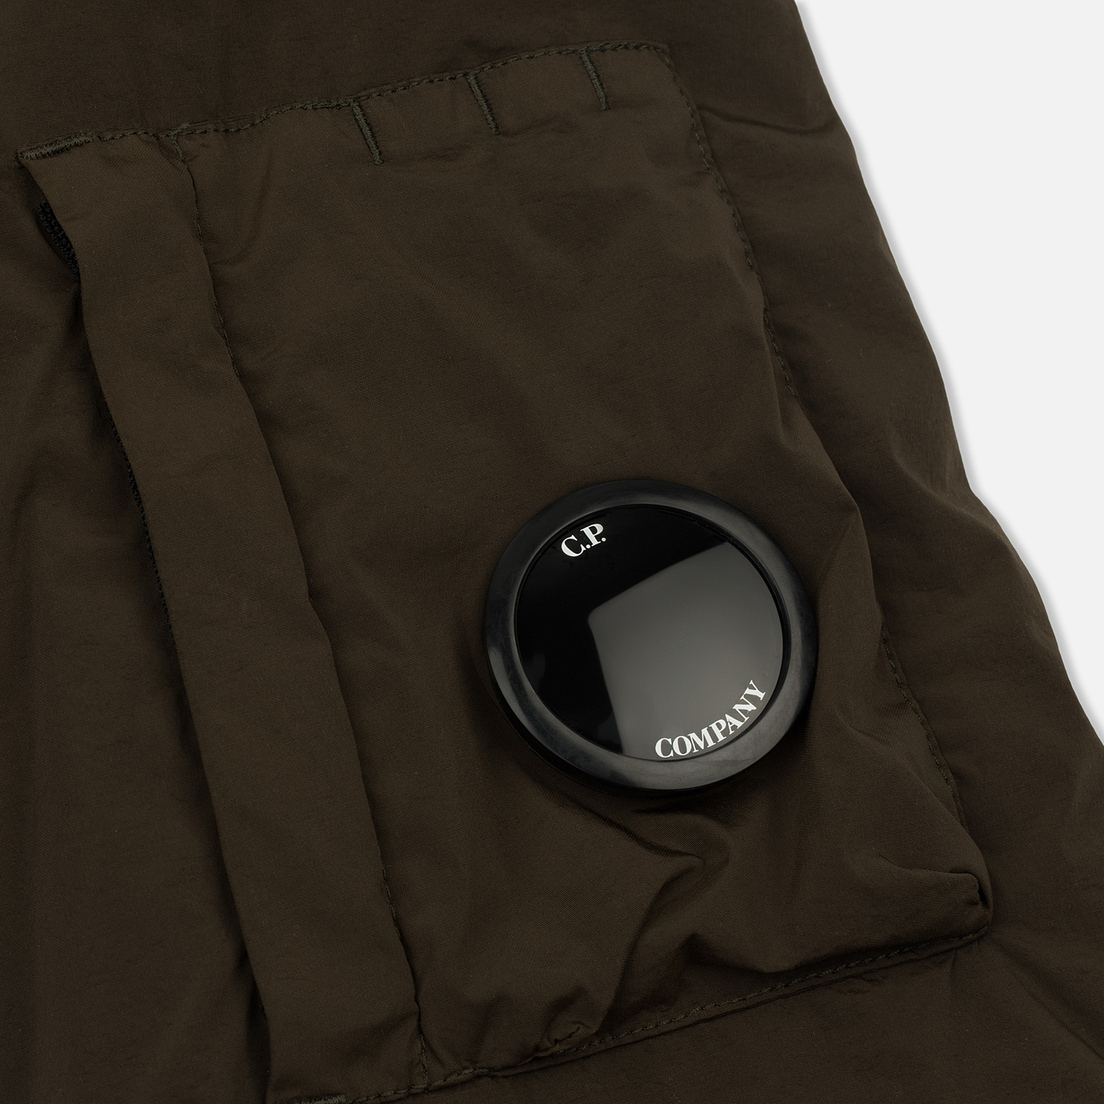 C.P. Company Мужская куртка бомбер Nycra Lens